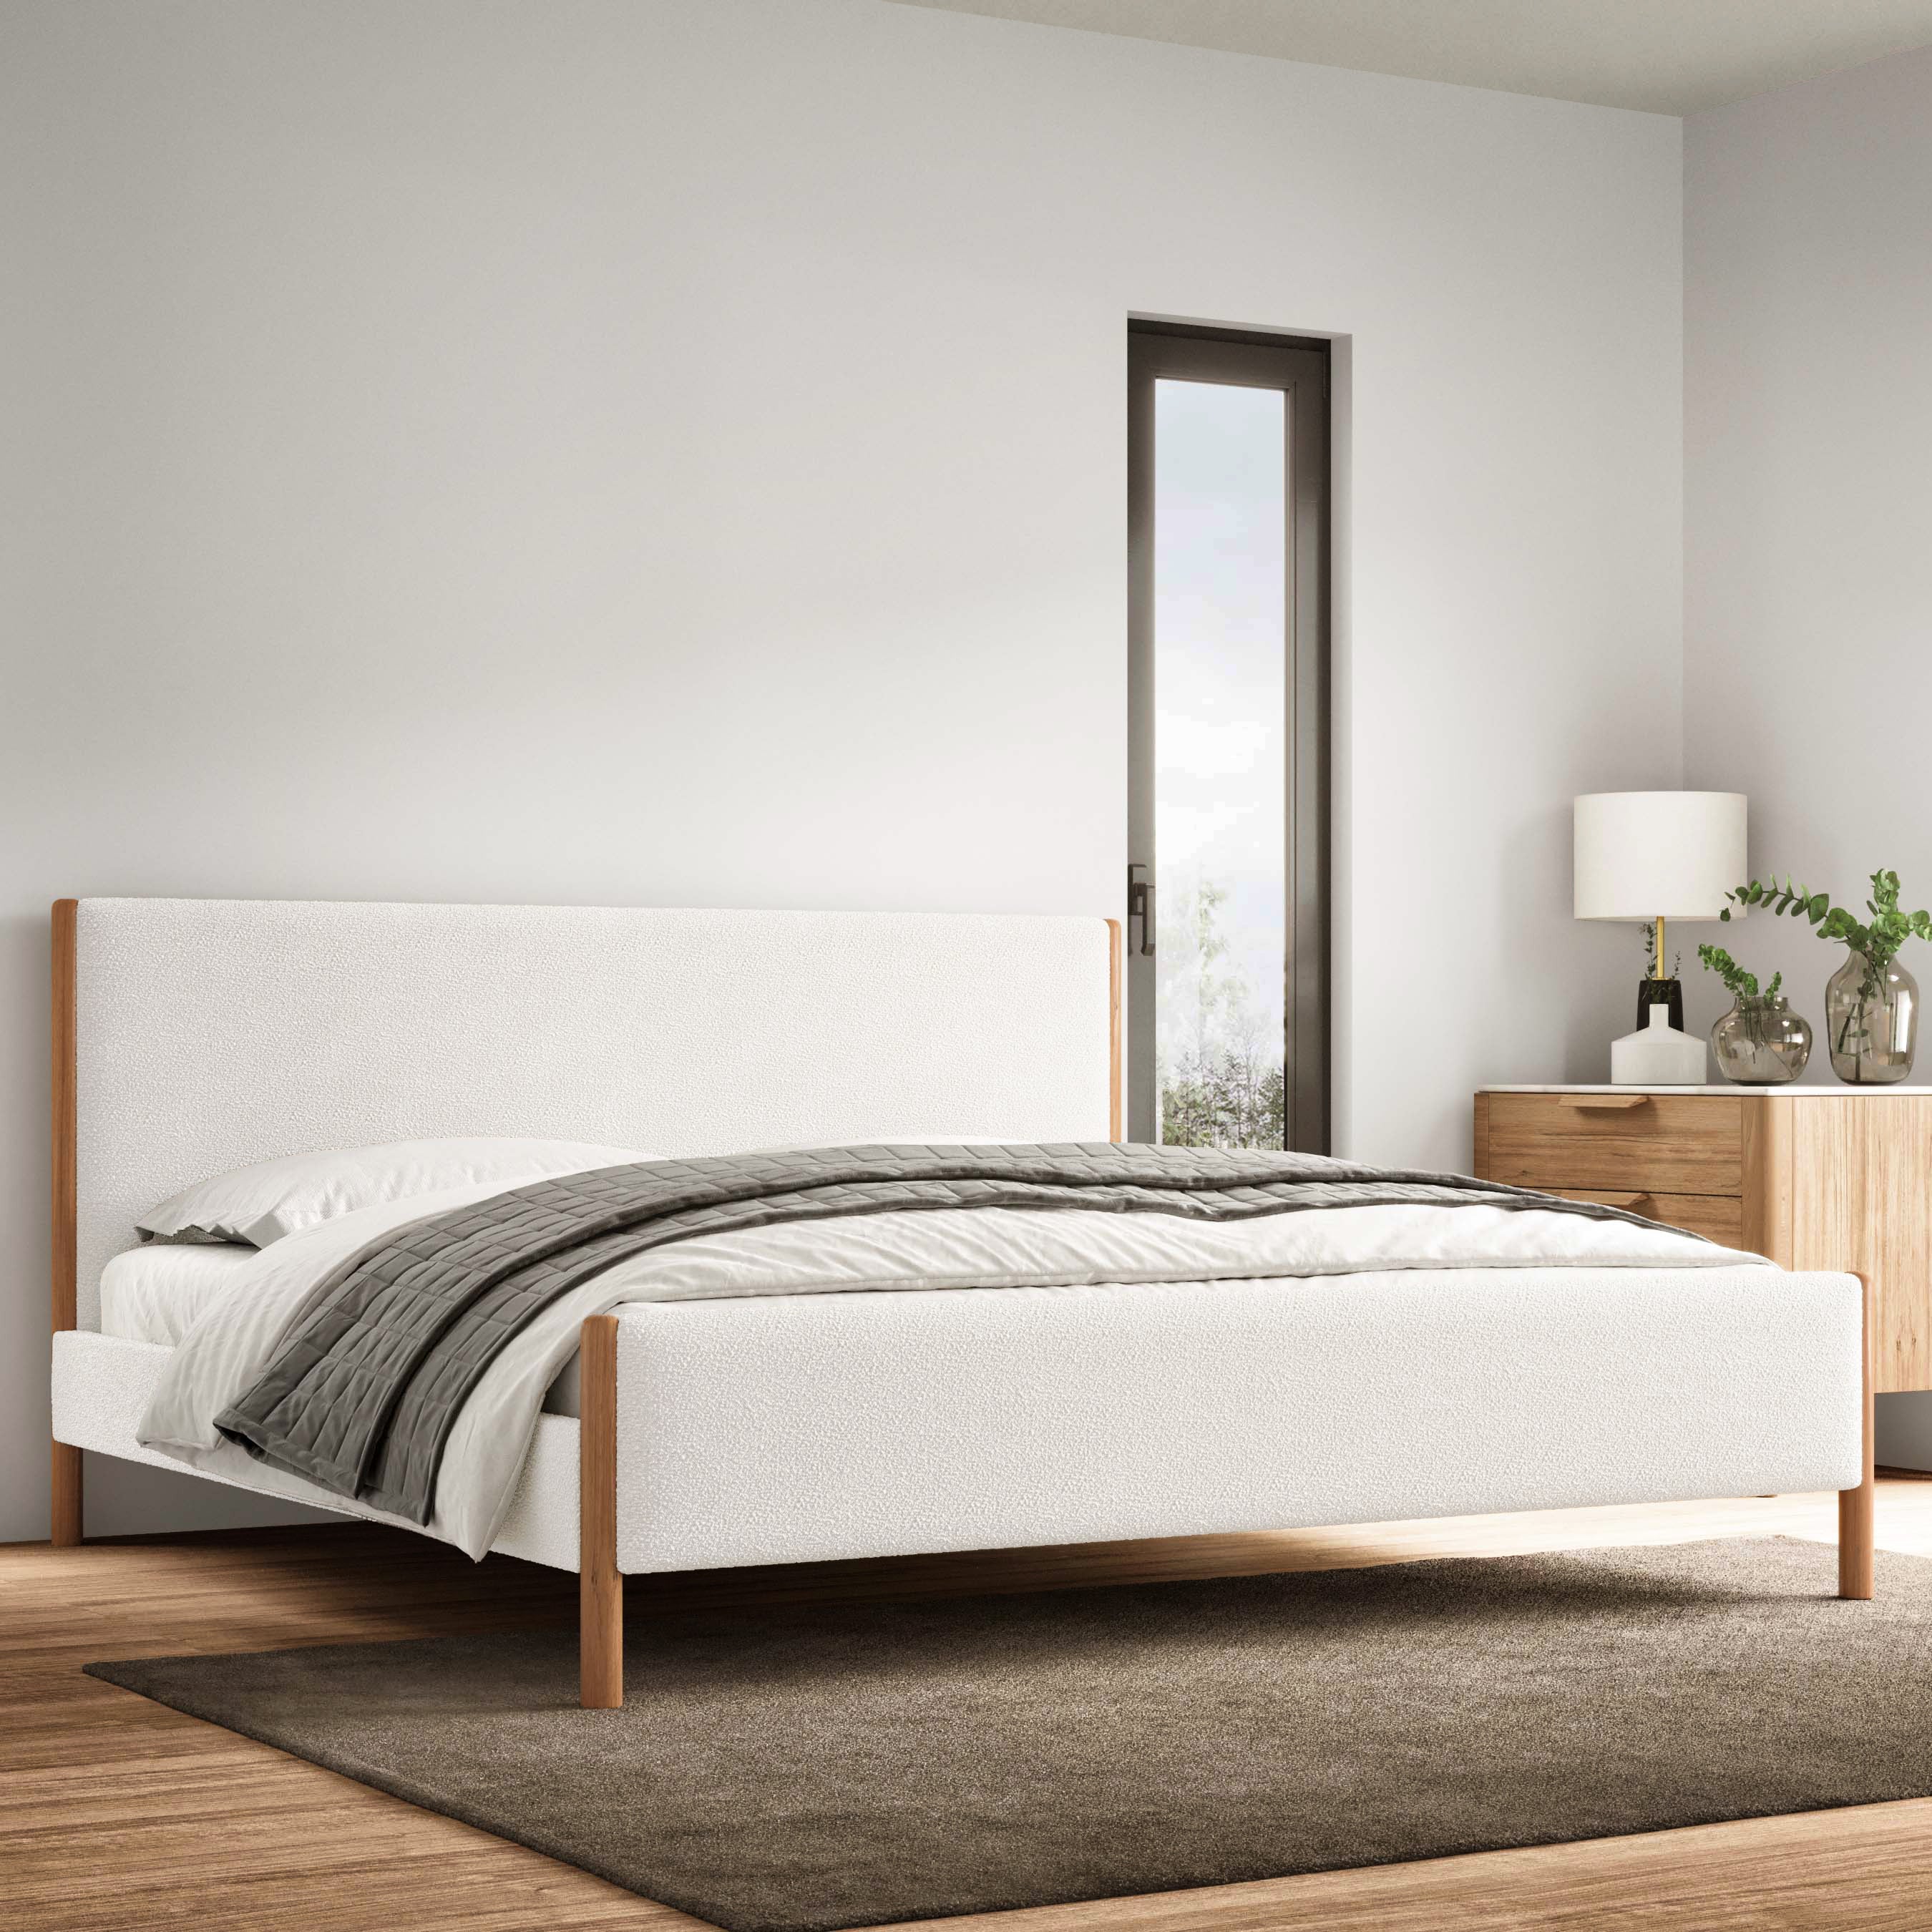 Liana Upholstered Platform King Bed, White Boucle Fabric